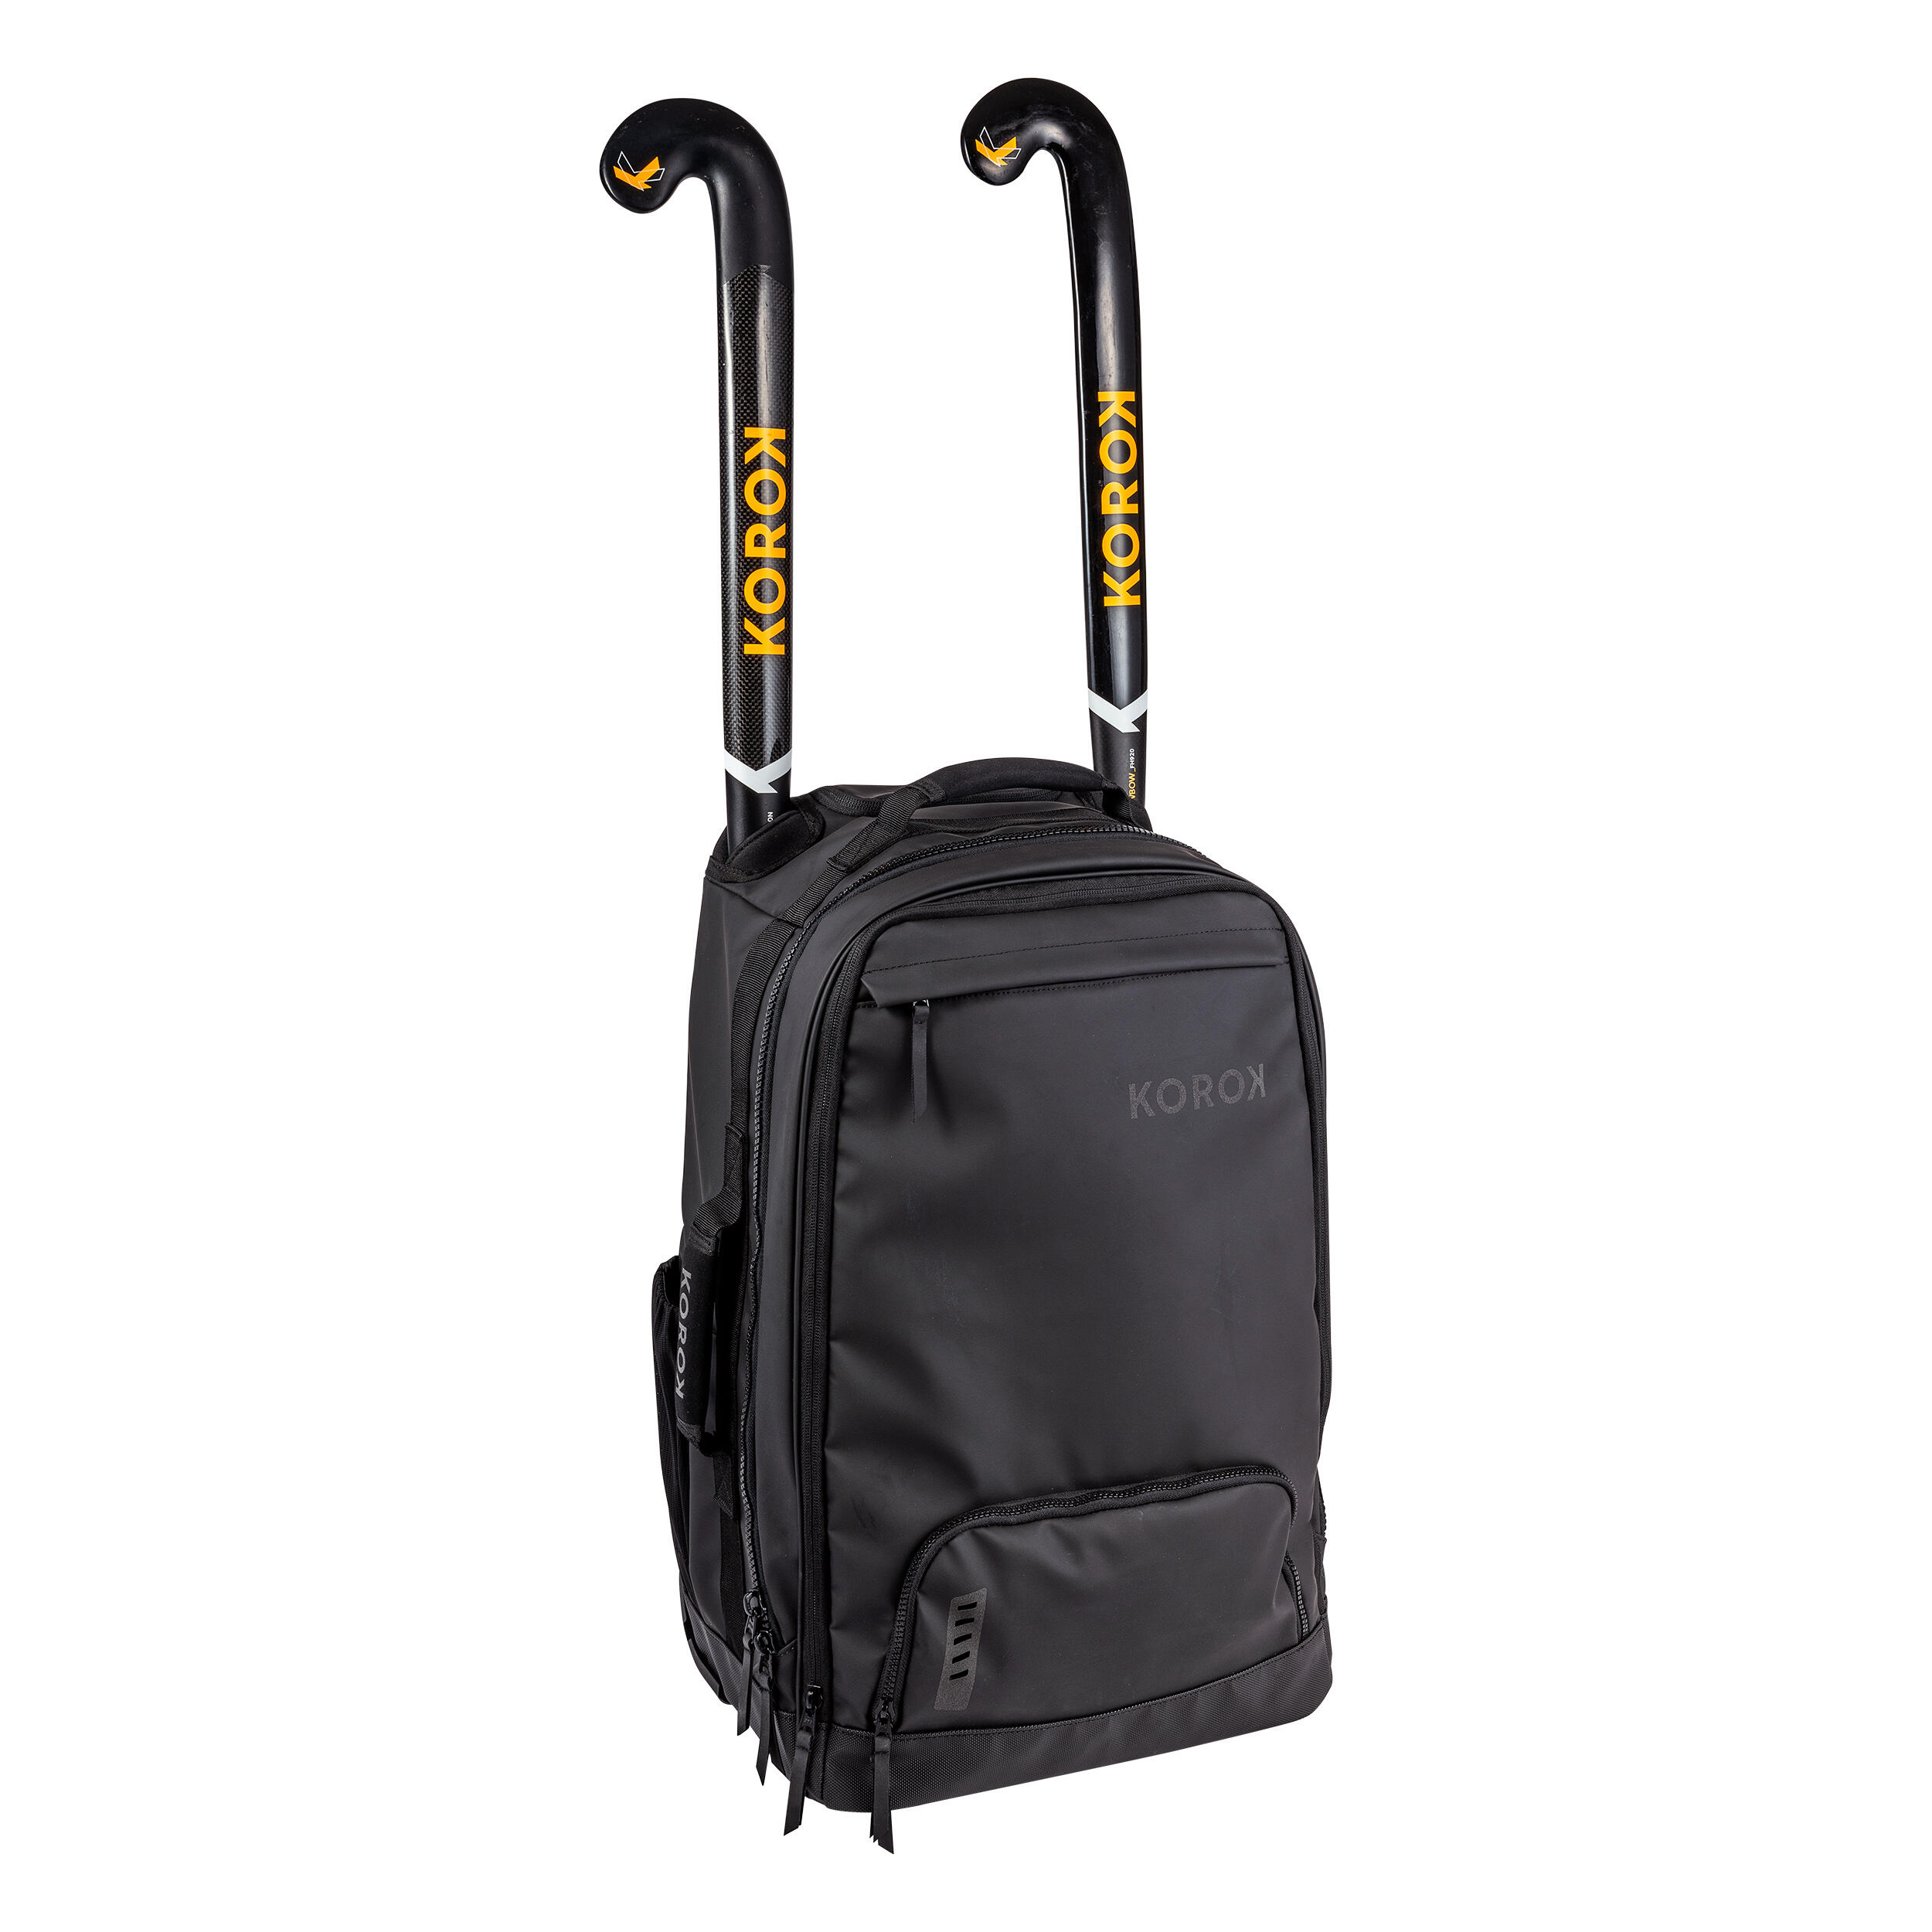 KOROK Trolley Bag FH900 - Black